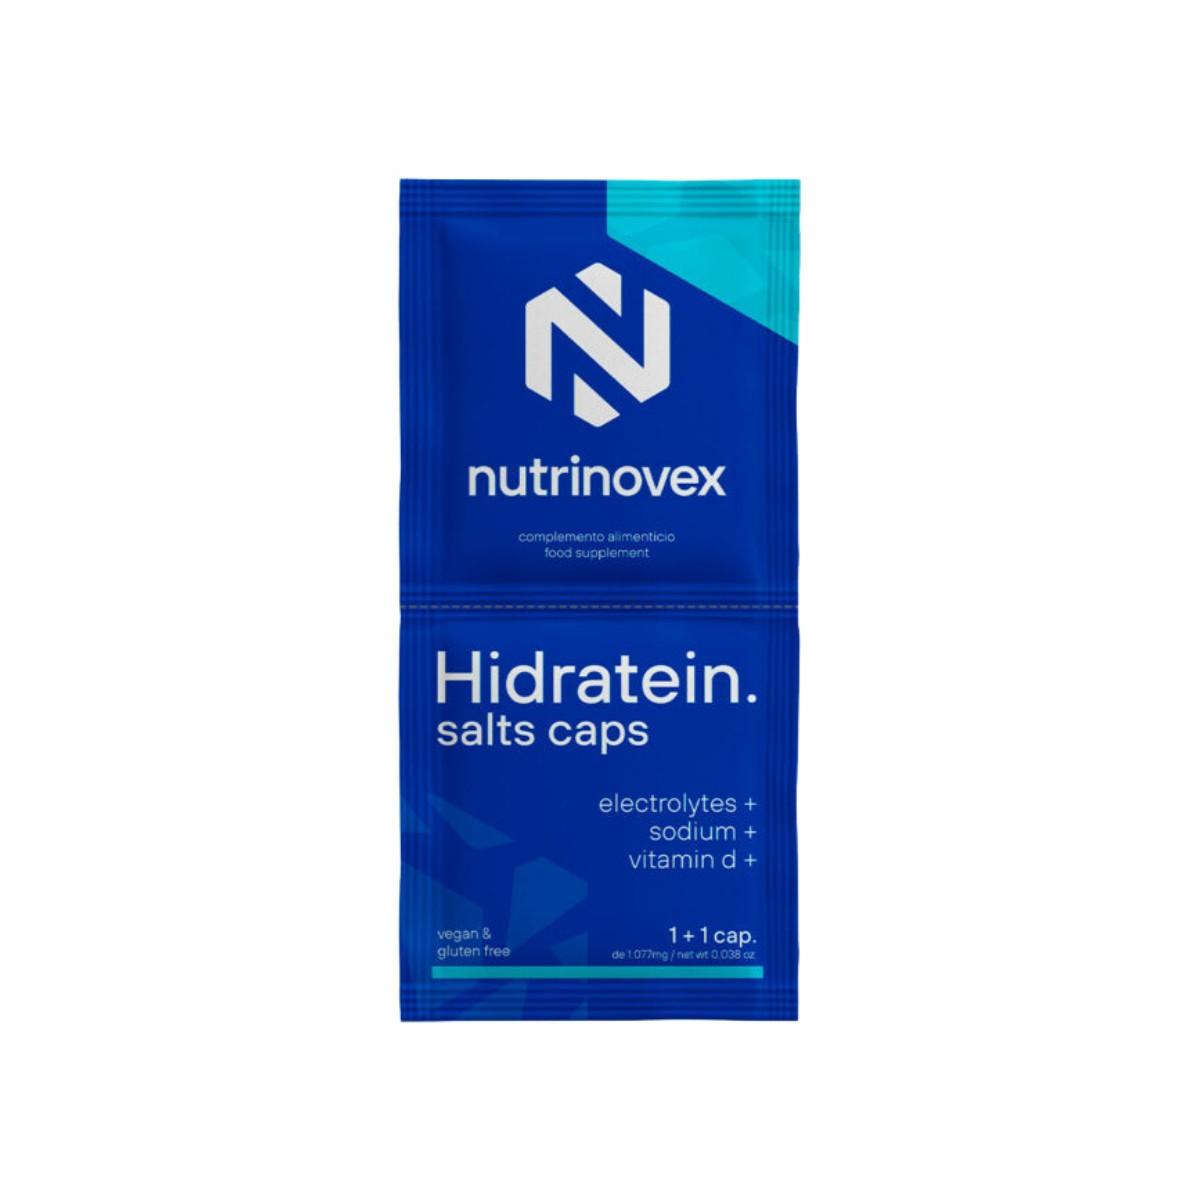 Capsules  Nutrinovex Hidratein Salts Caps